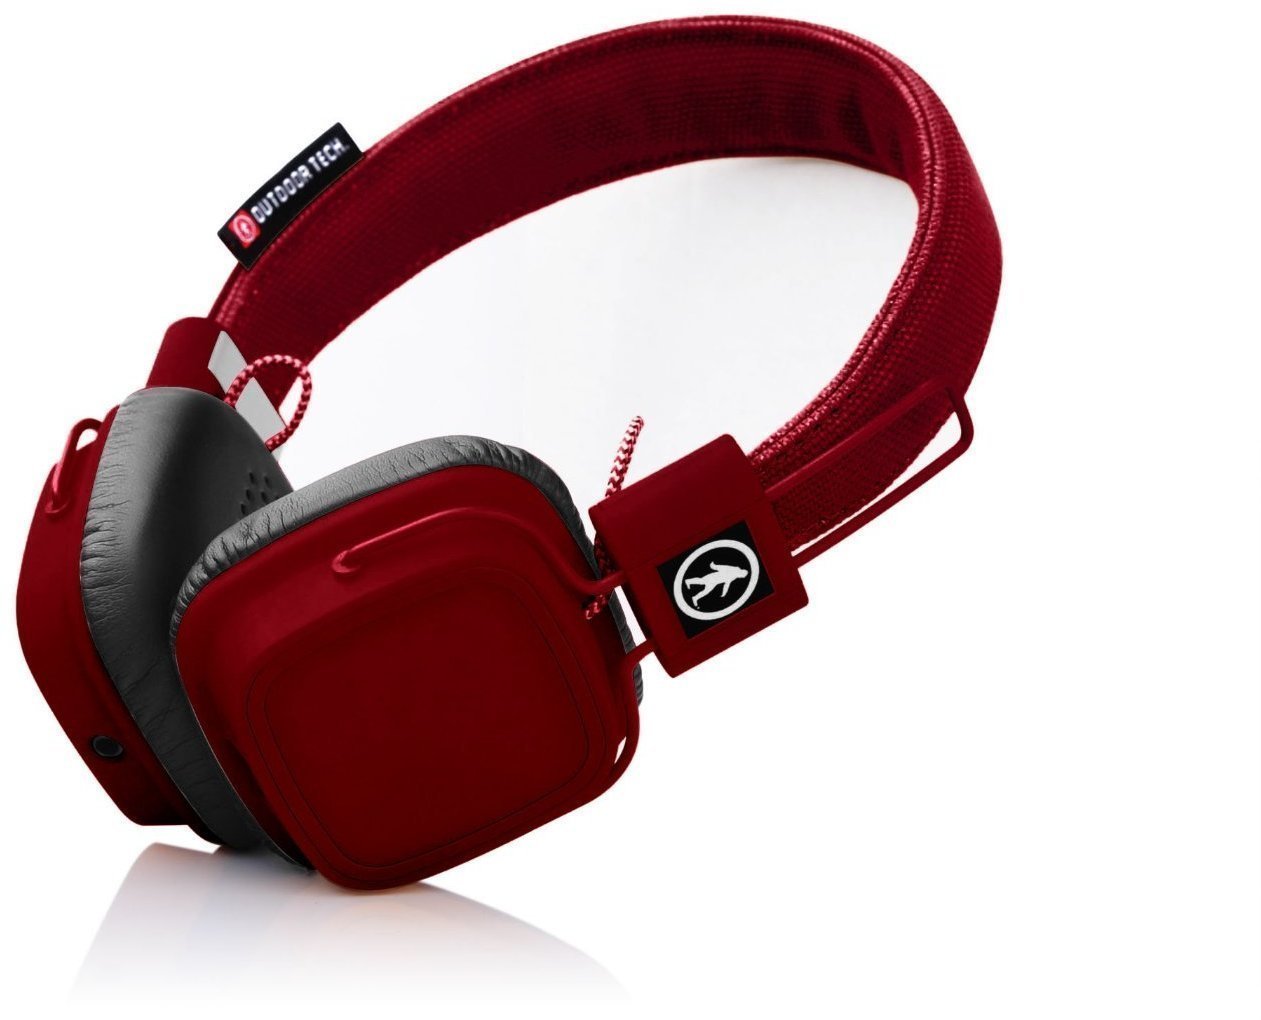 Casque de diffusion Outdoor Tech Privates - Wireless Touch Control Headphones - Crimson